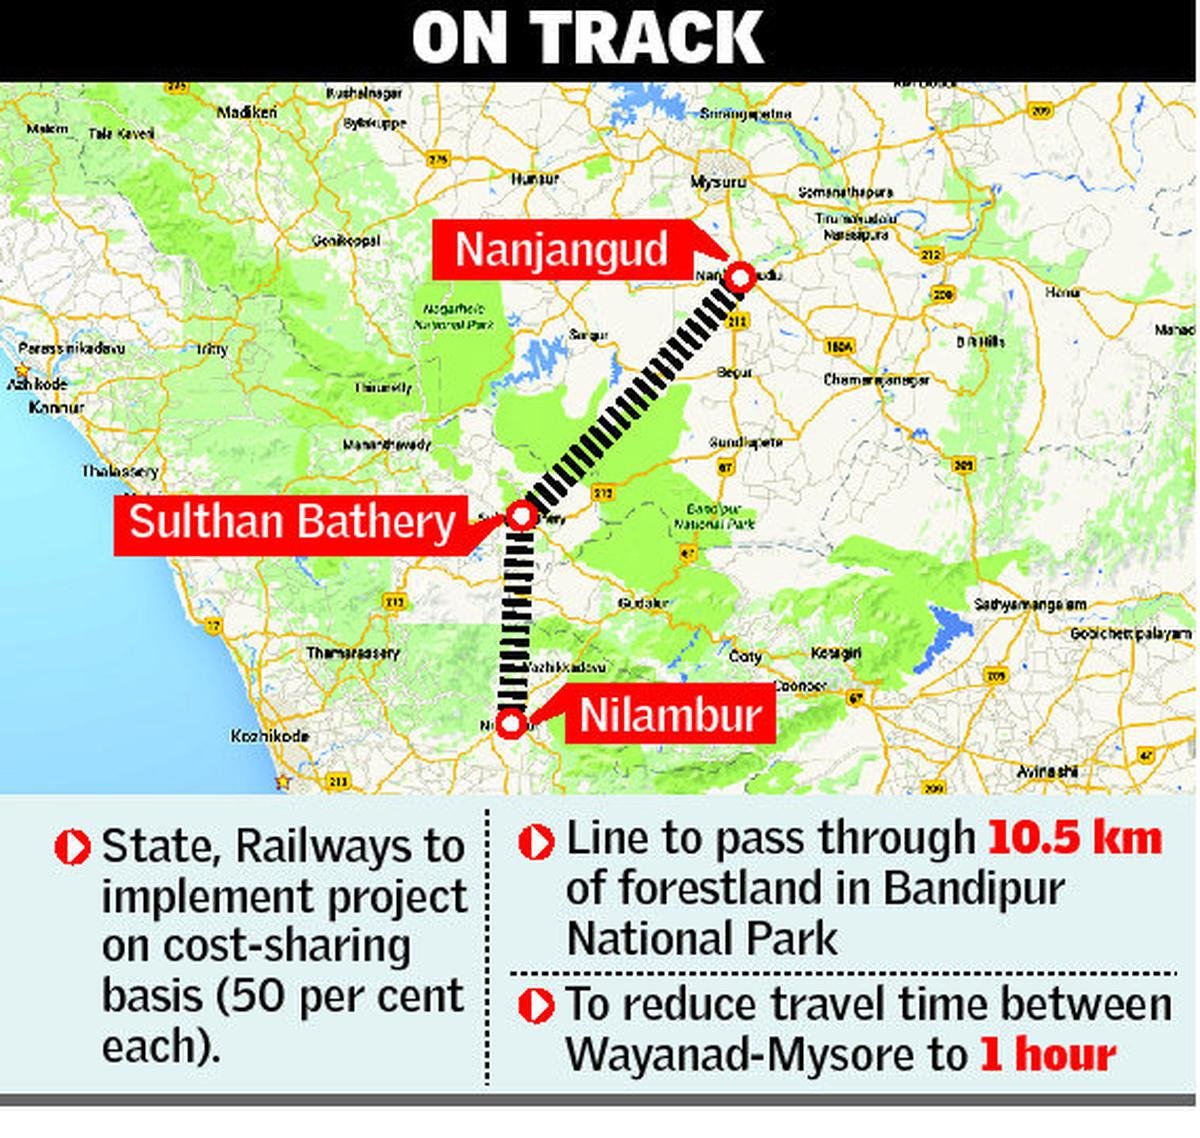 Centre's nod for resurvey of Nilambur-Nanjangud railway line - The Hindu